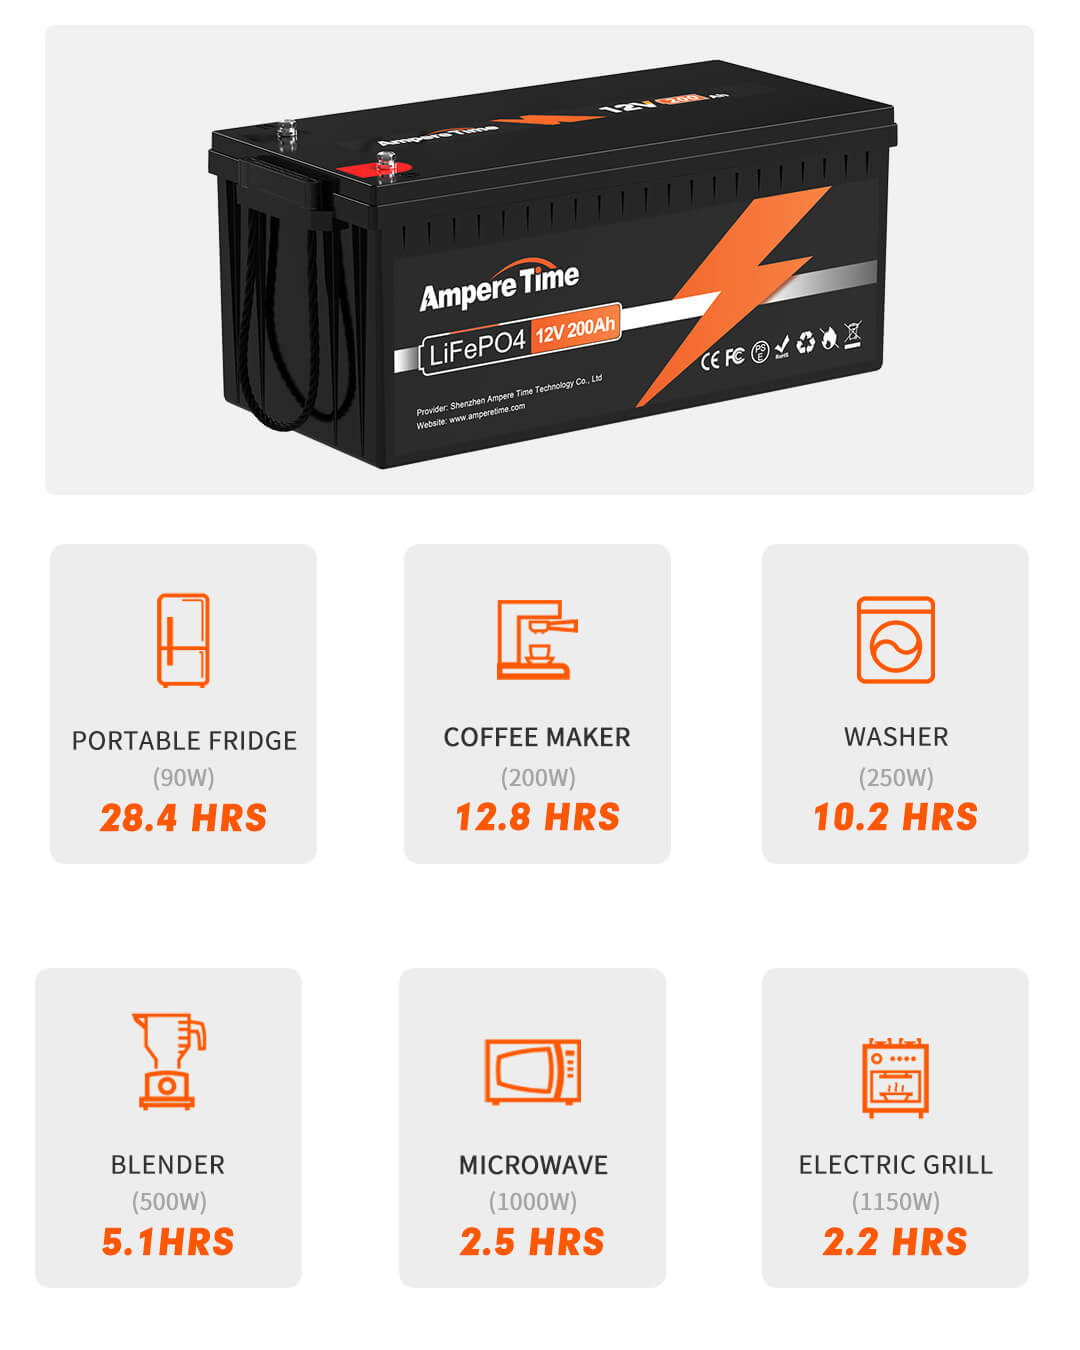 Ampere Time 12V 200Ah Plus, 2560Wh LiFePO4 Battery – Amperetime-US